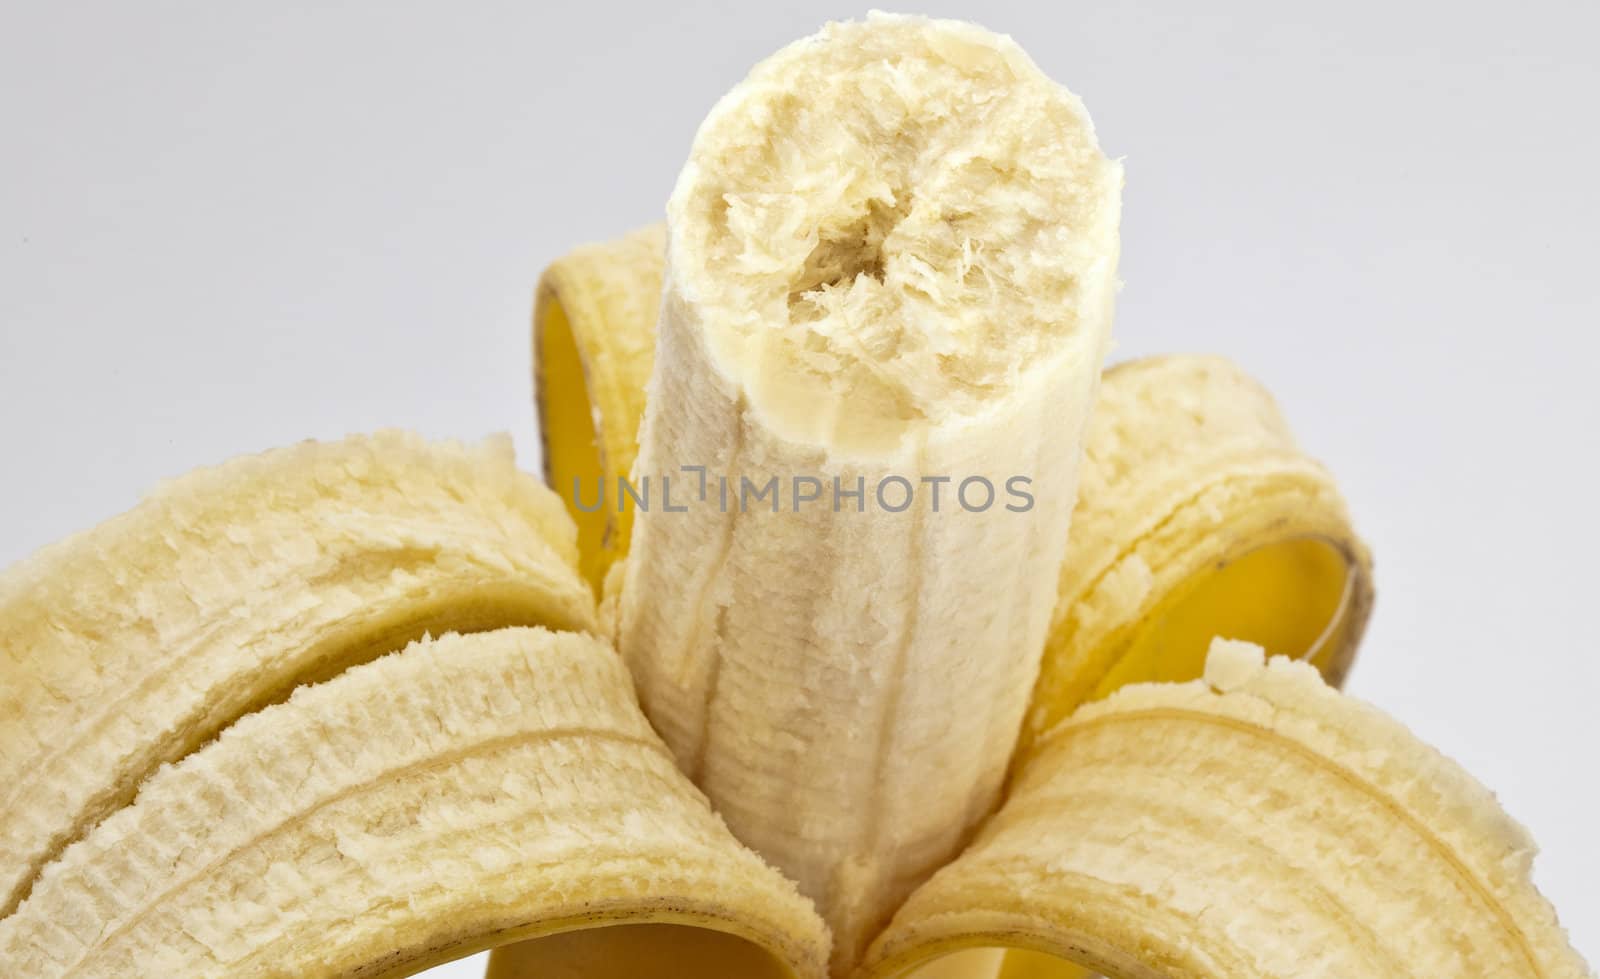 Fit-Banana by DphiMan